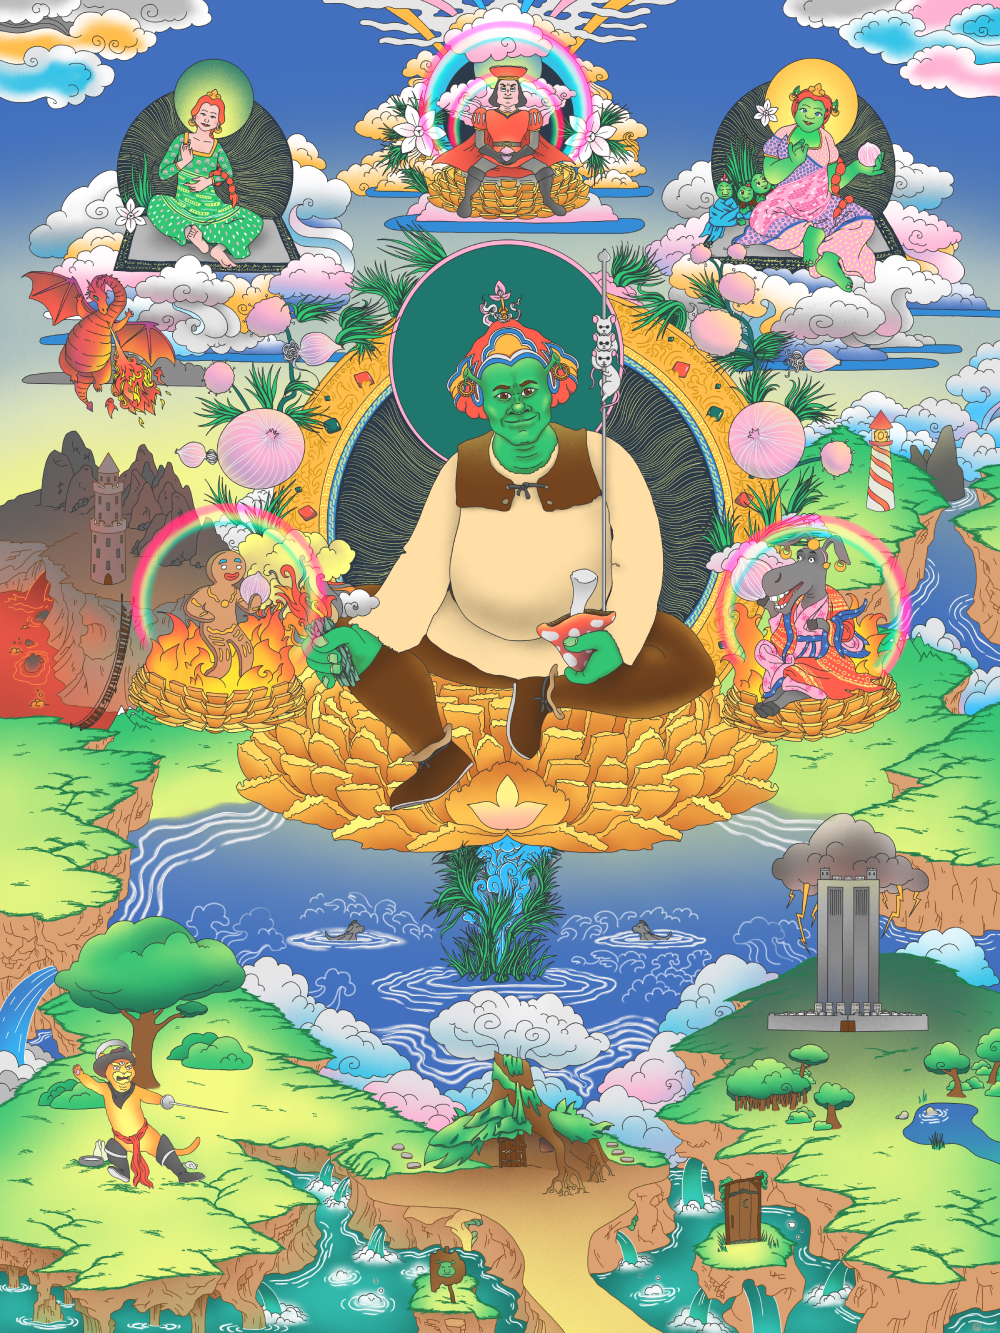 Shrek characters in place of traditional Padmasambhava religious illustration